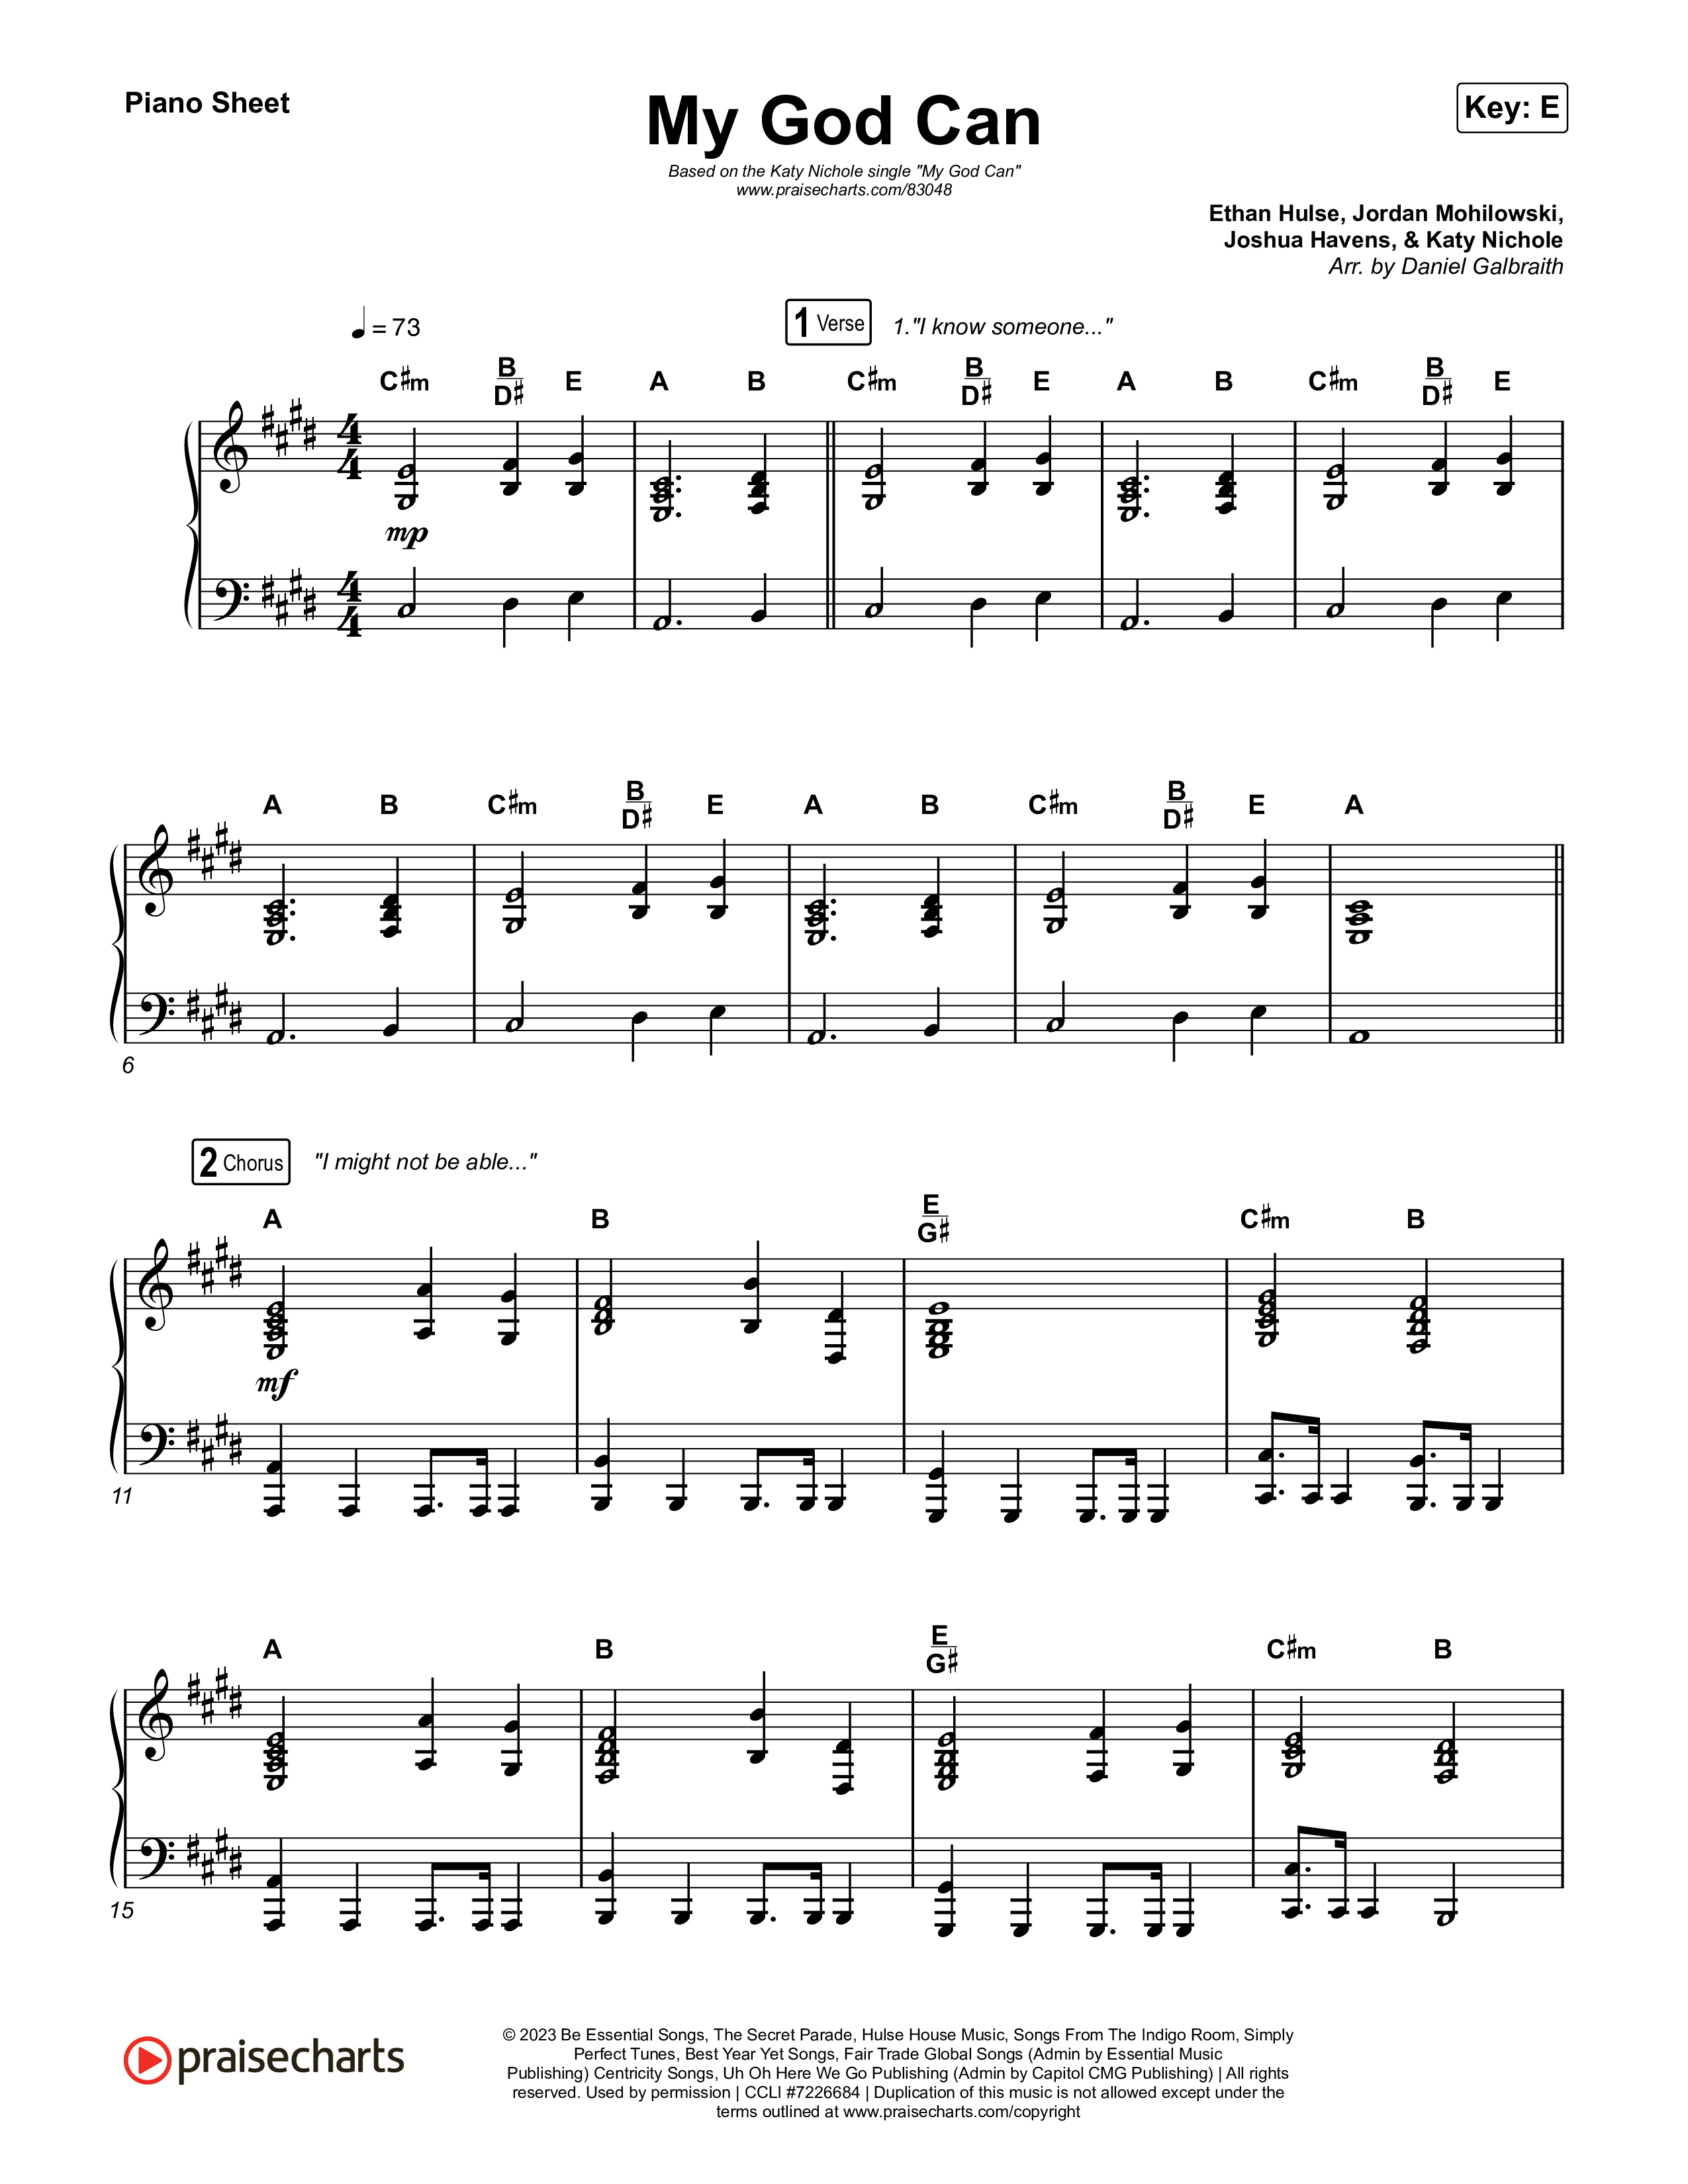 My God Can Sheet Music PDF (Katy Nichole / Naomi Raine) - PraiseCharts